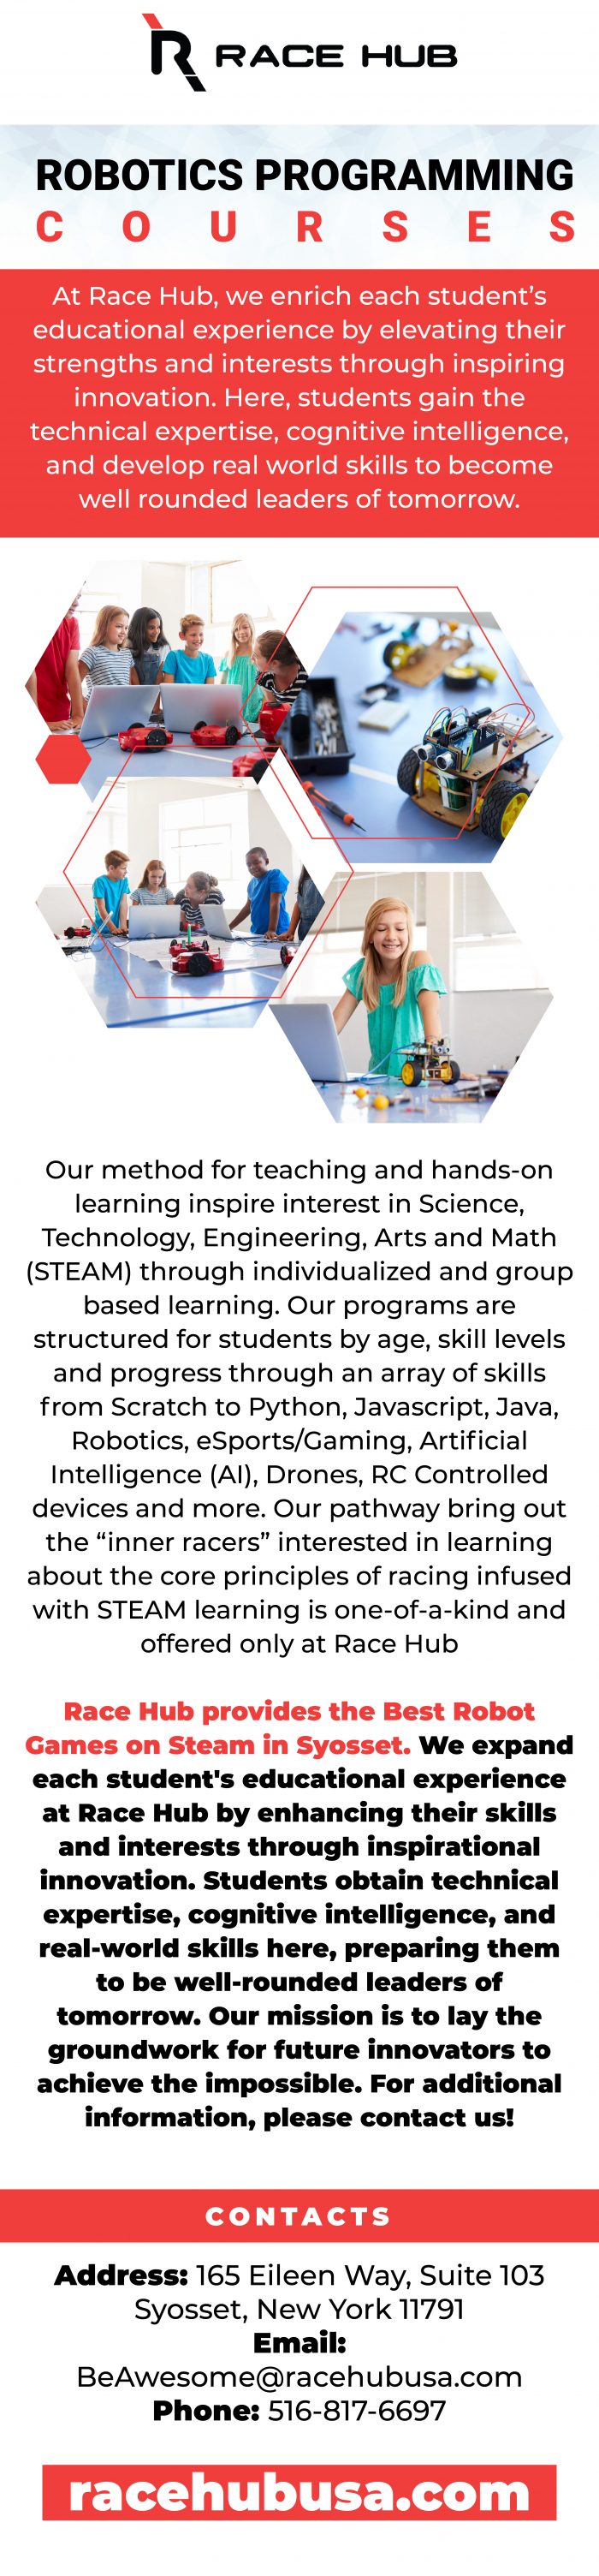 Best robotics programming courses at Race Hub